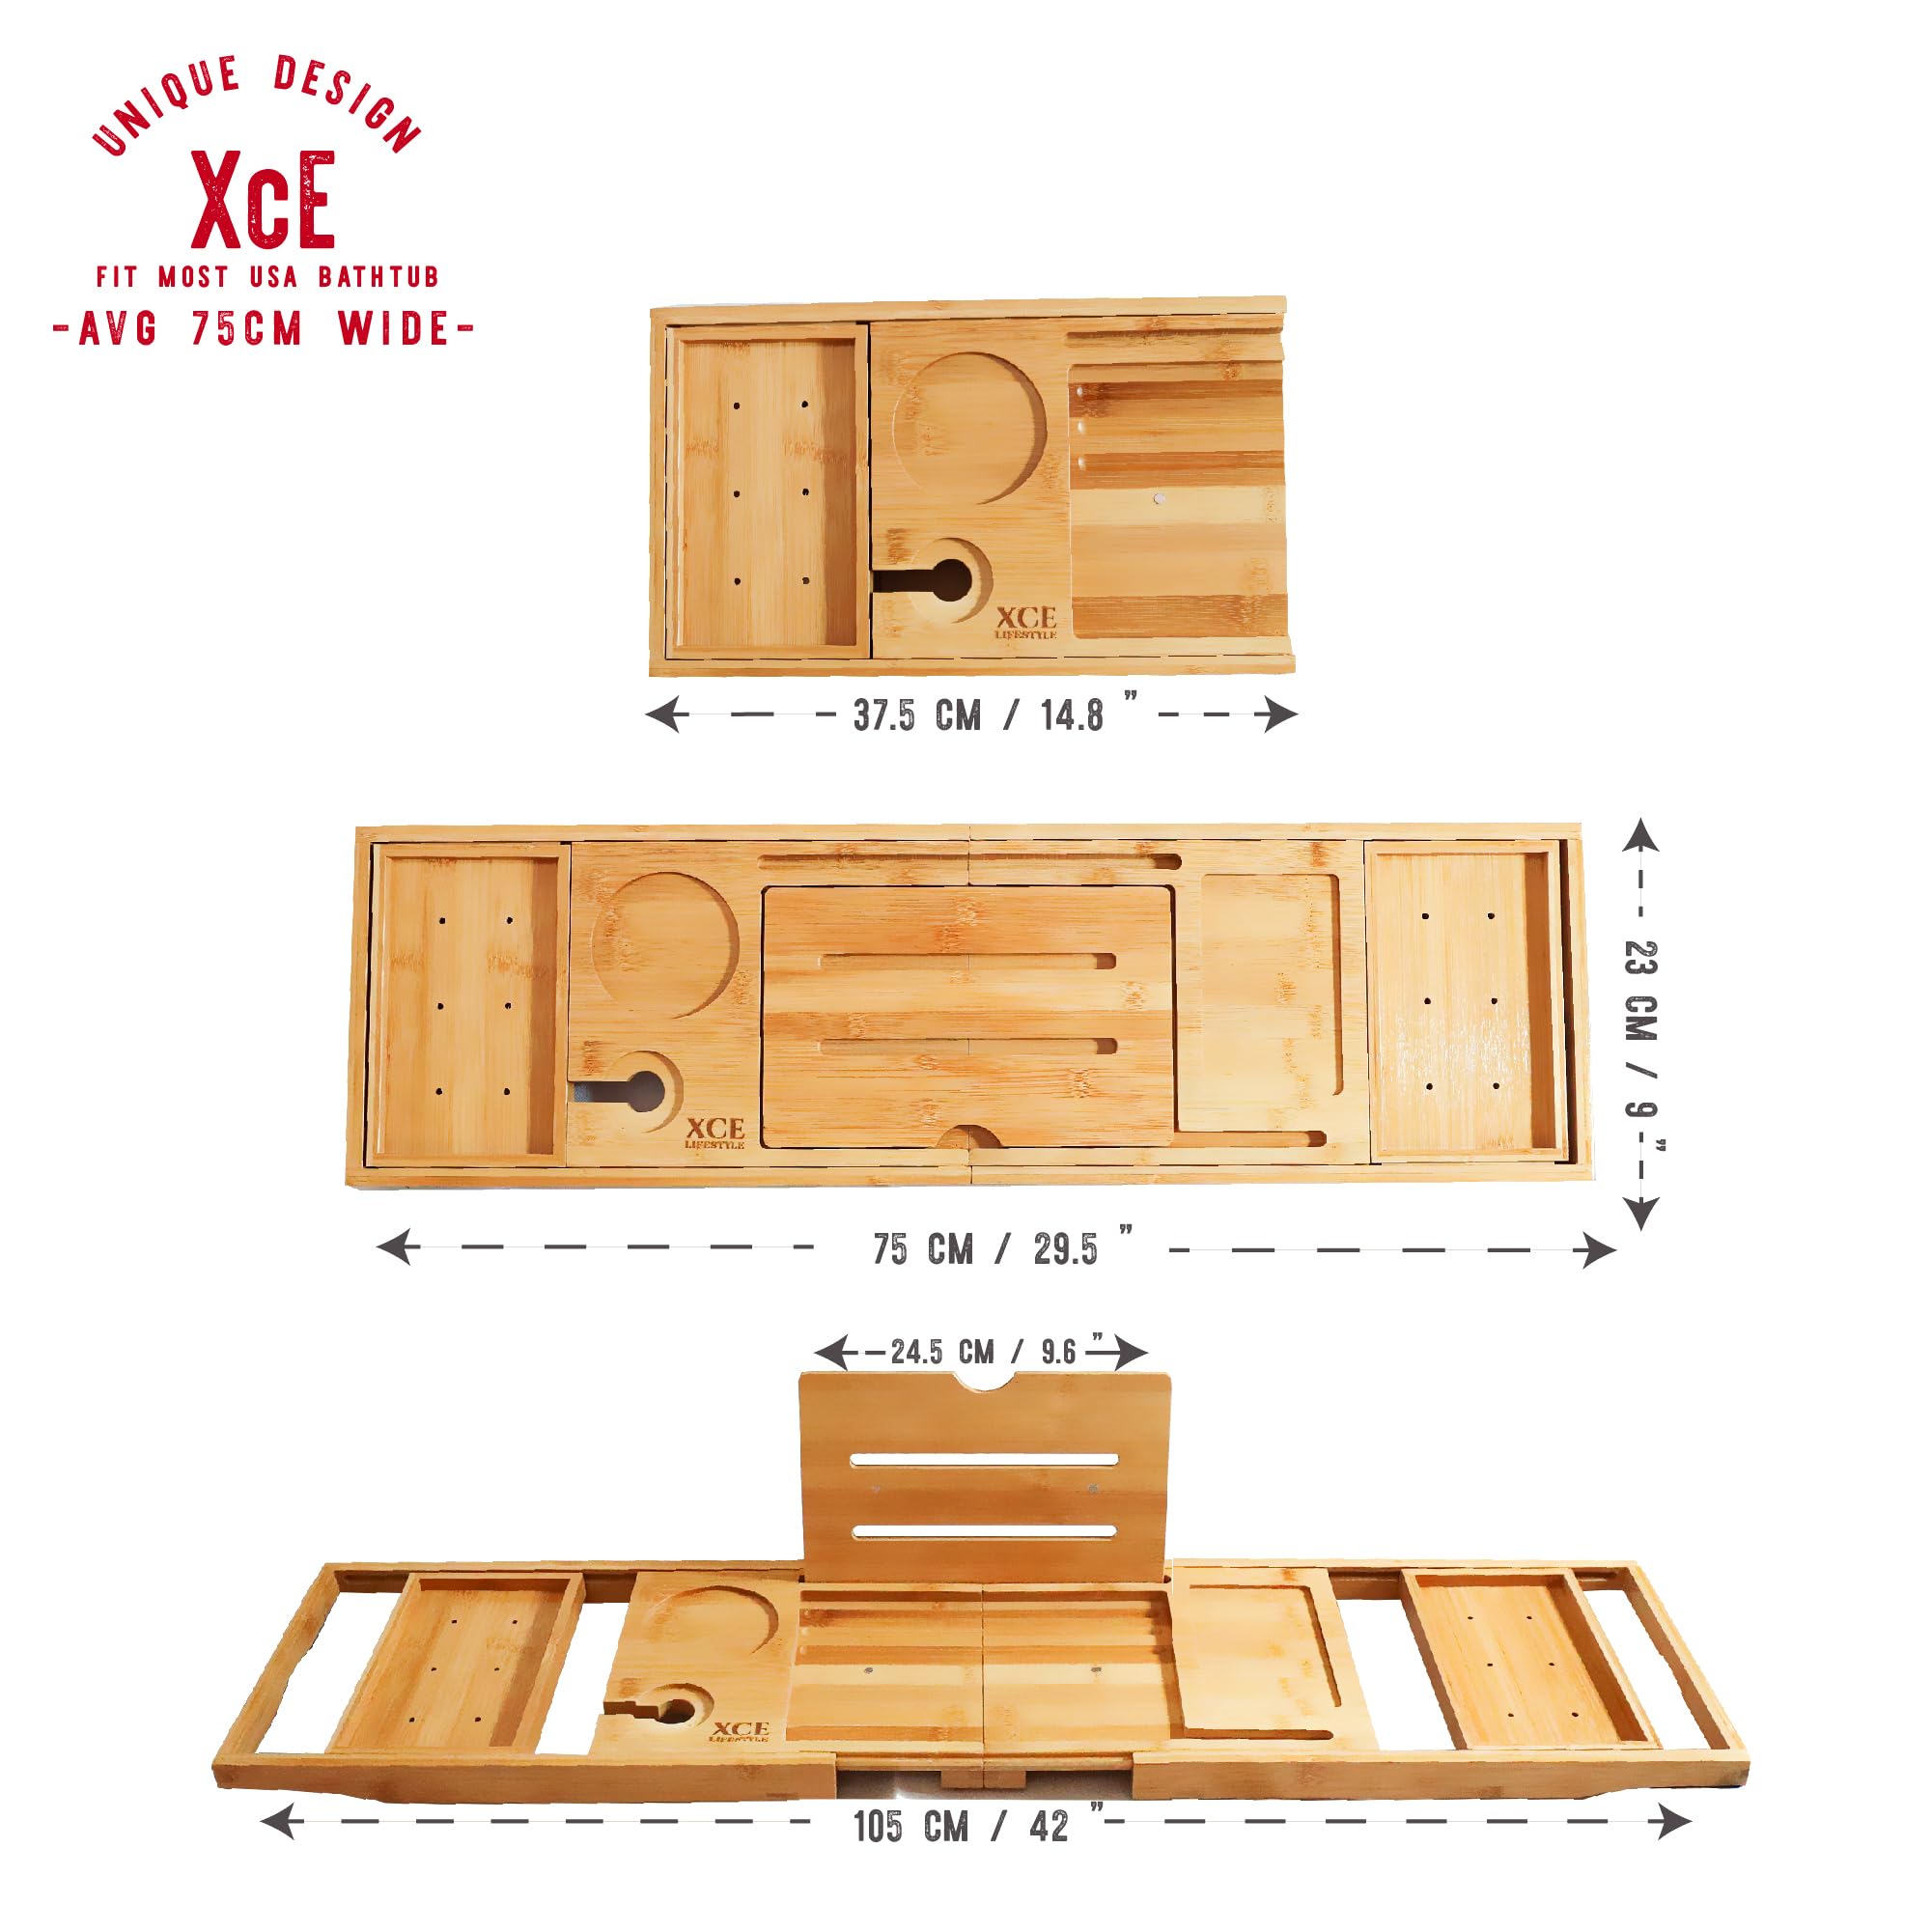 XcE Foldable Bathtub Tray Expandable to 105cm for Luxury Bath, Bath Tray for Bathtub, Natural